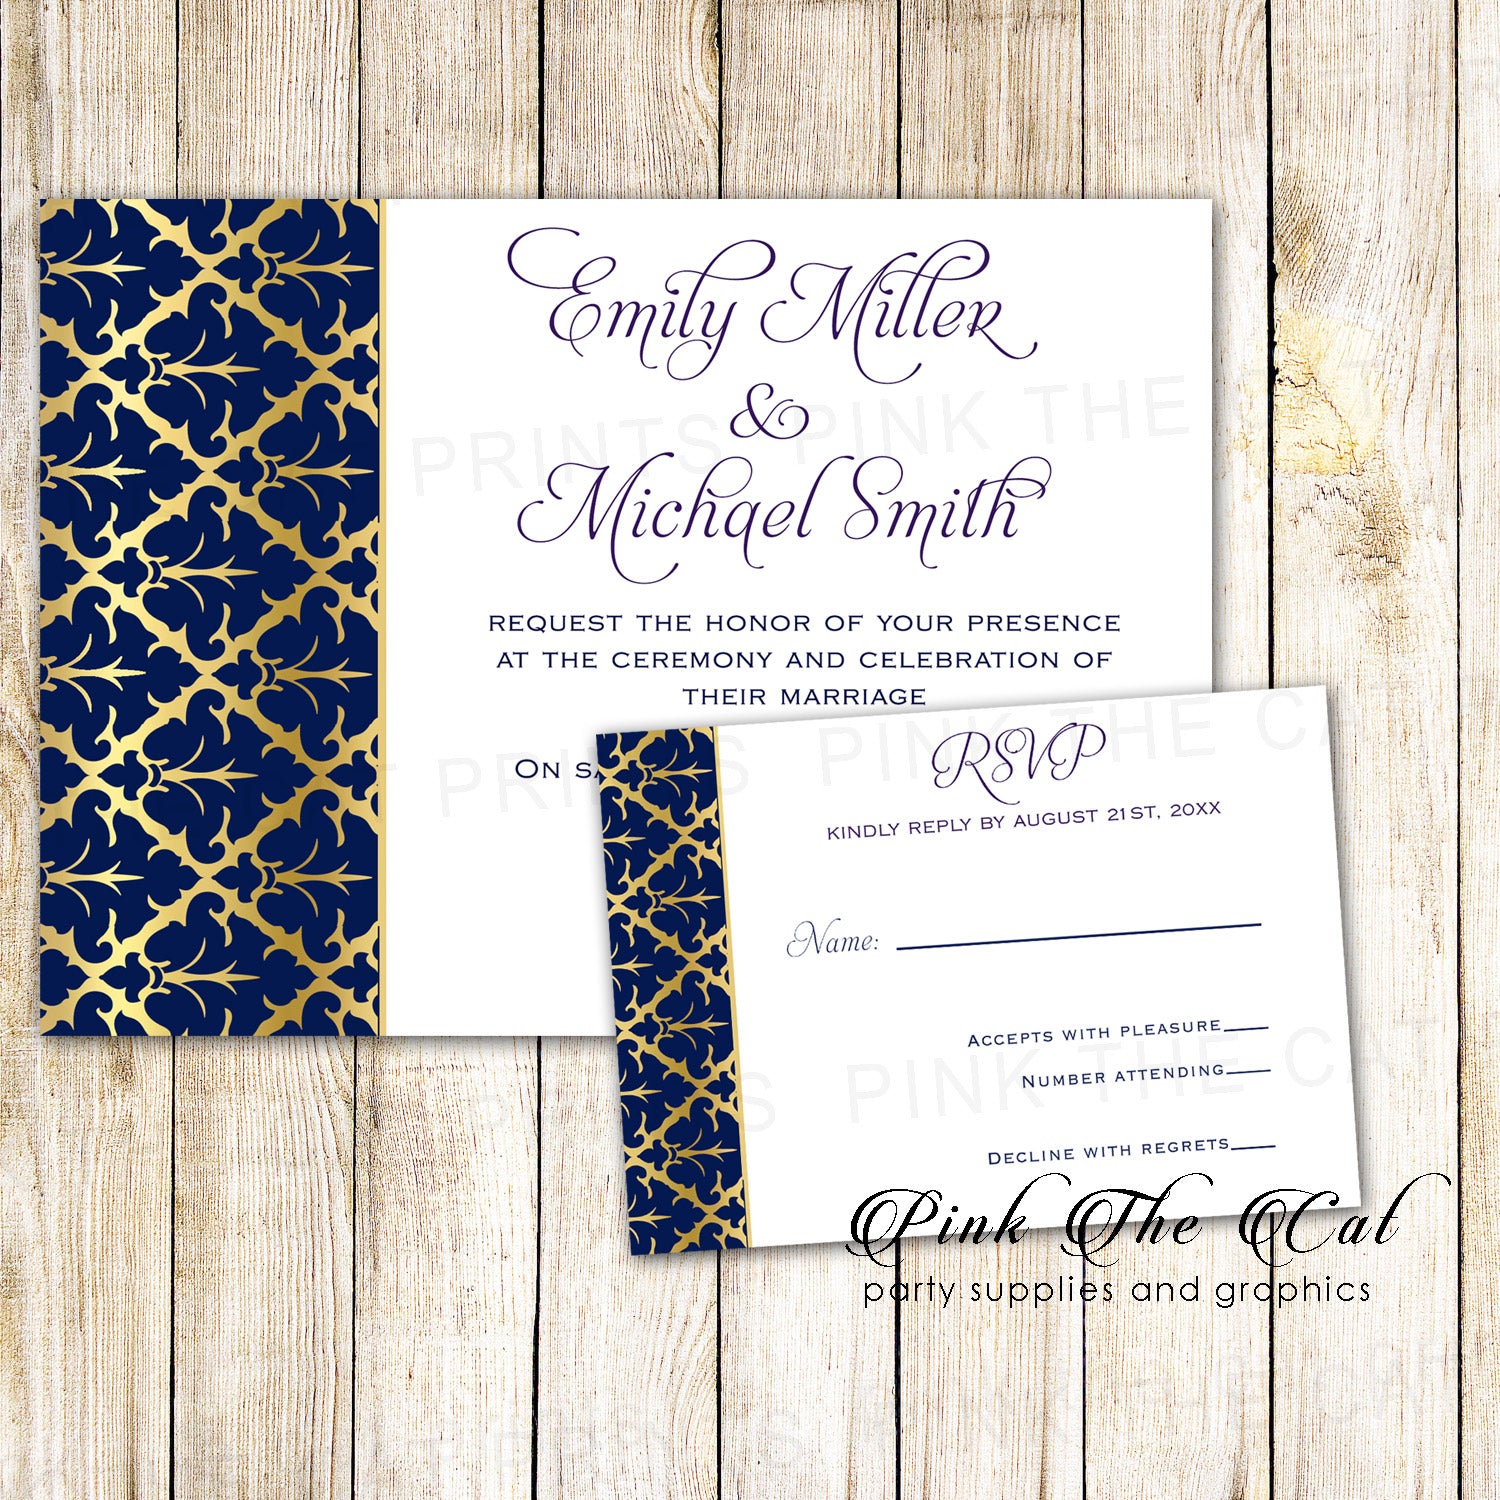 100 wedding invitations navy blue gold & response cards